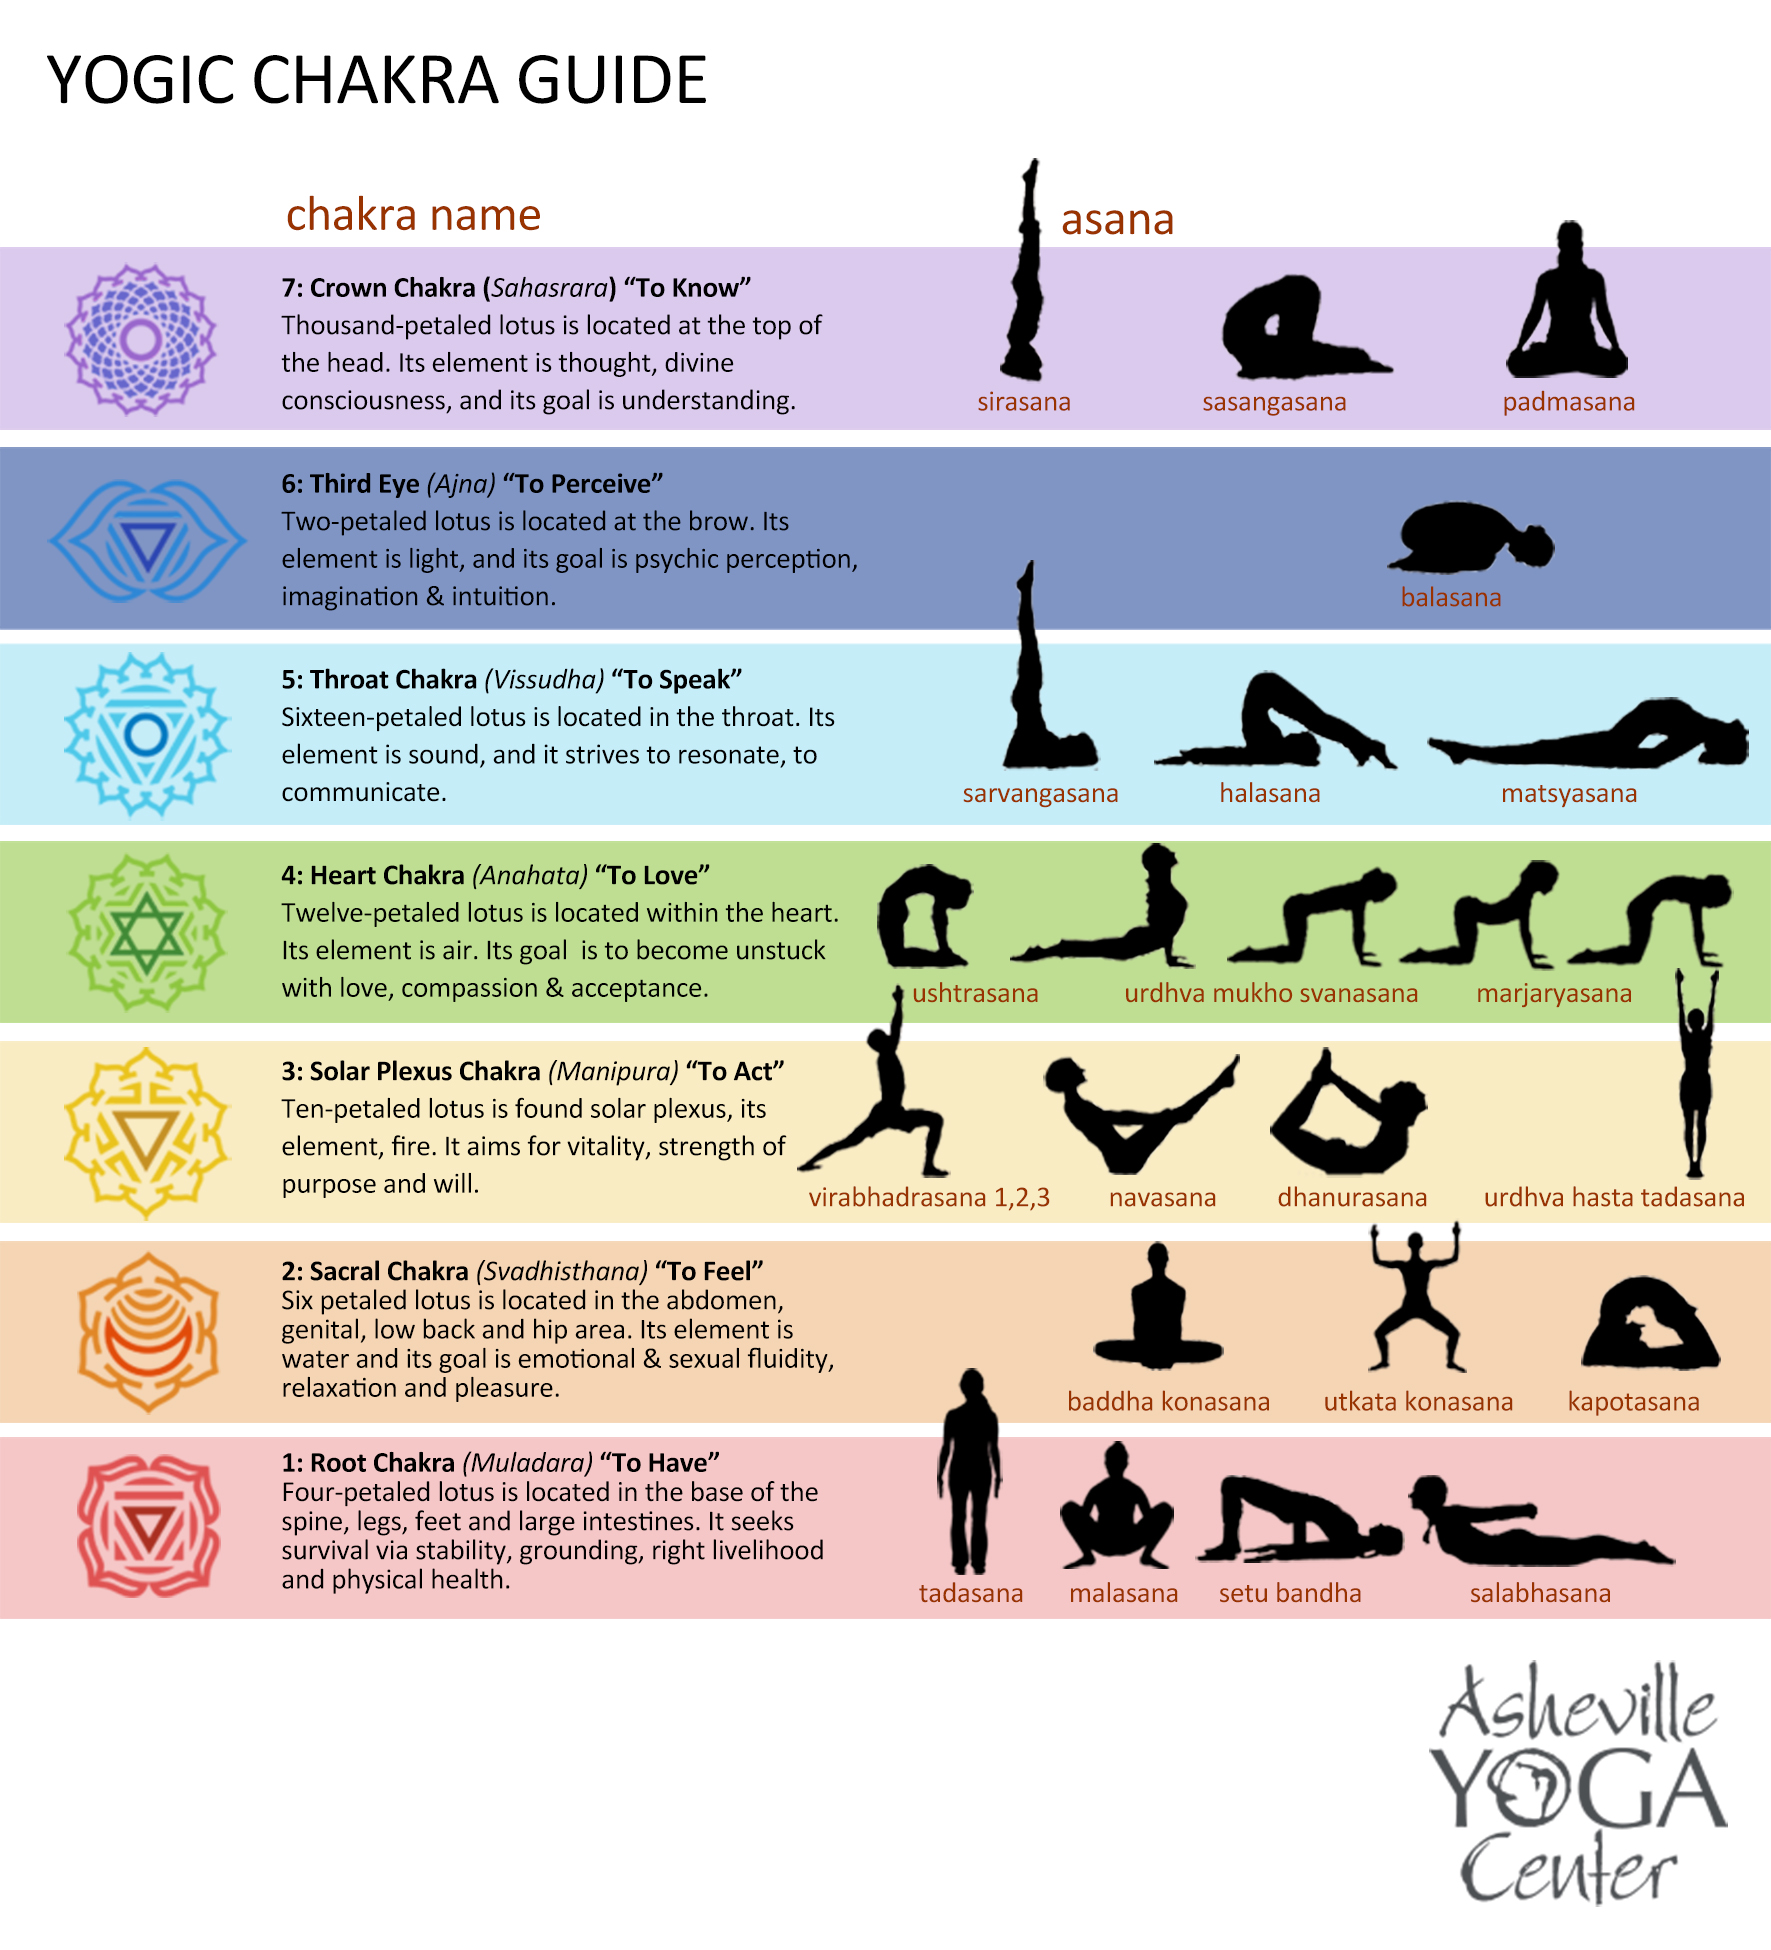 Yoga Chakra Guide - Asheville Yoga Center Blog Post